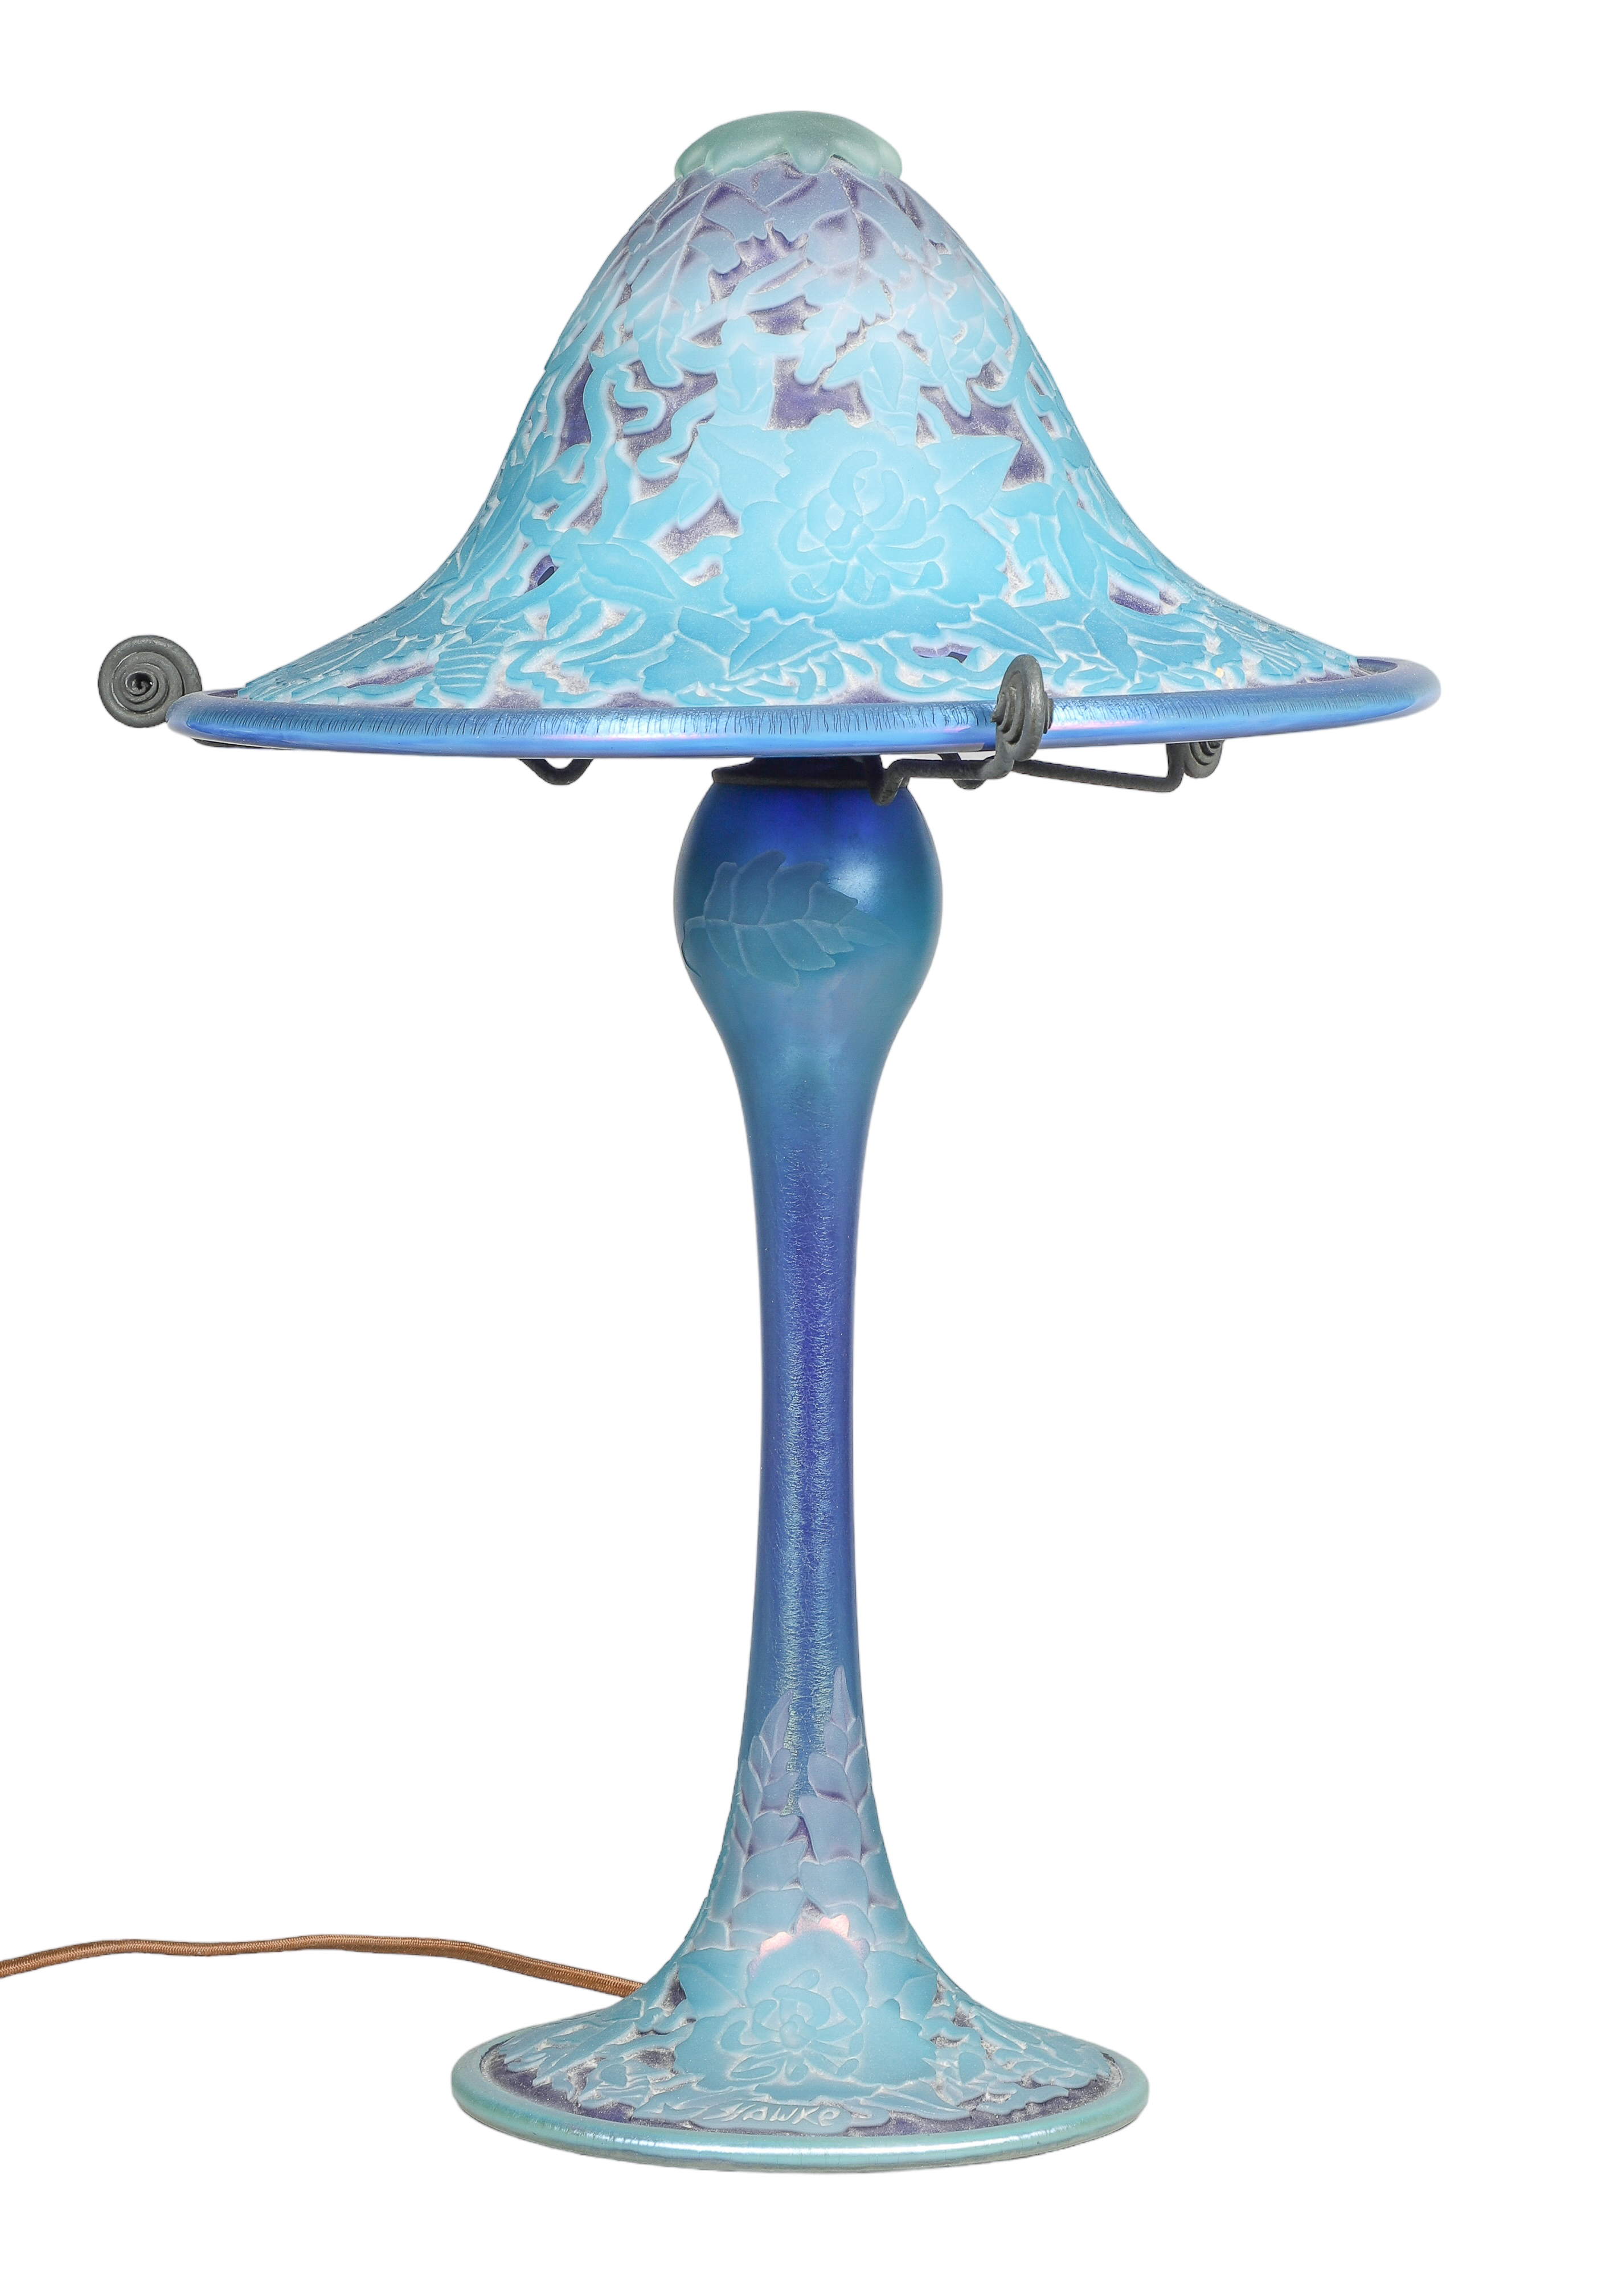 Iridescent cameo glass table lamp  2e1d3b